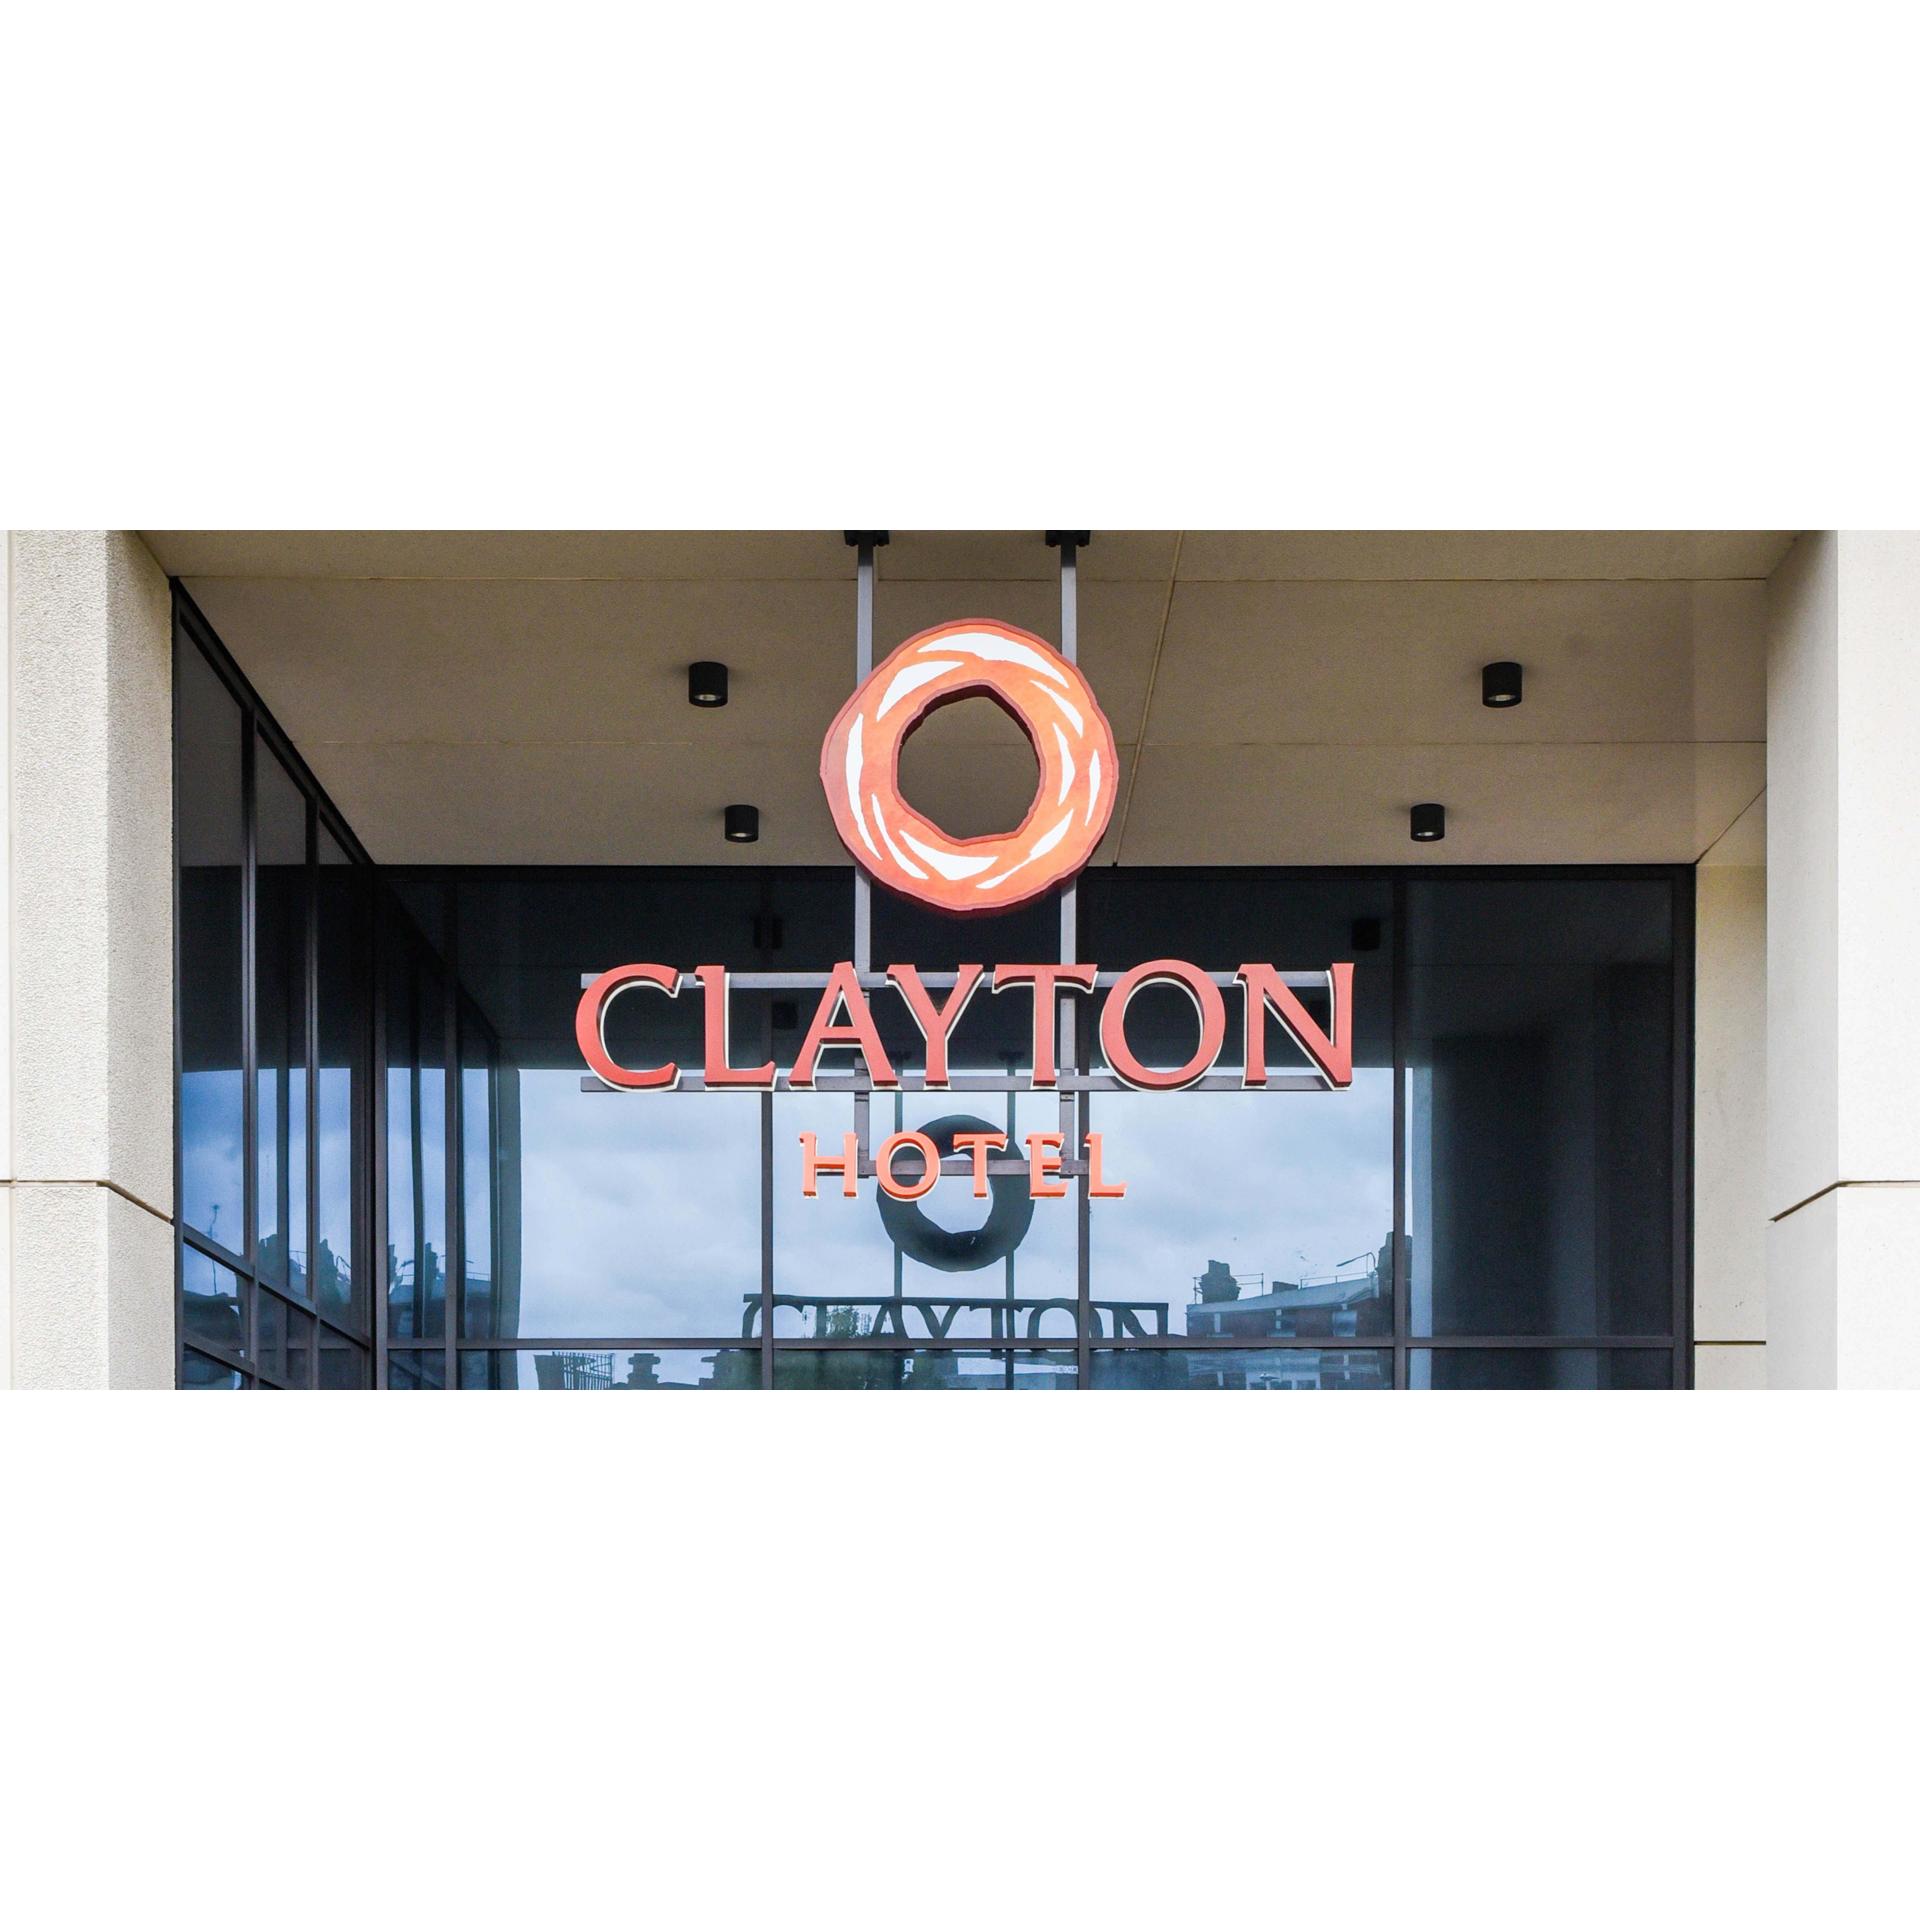 clayton-city-of-london